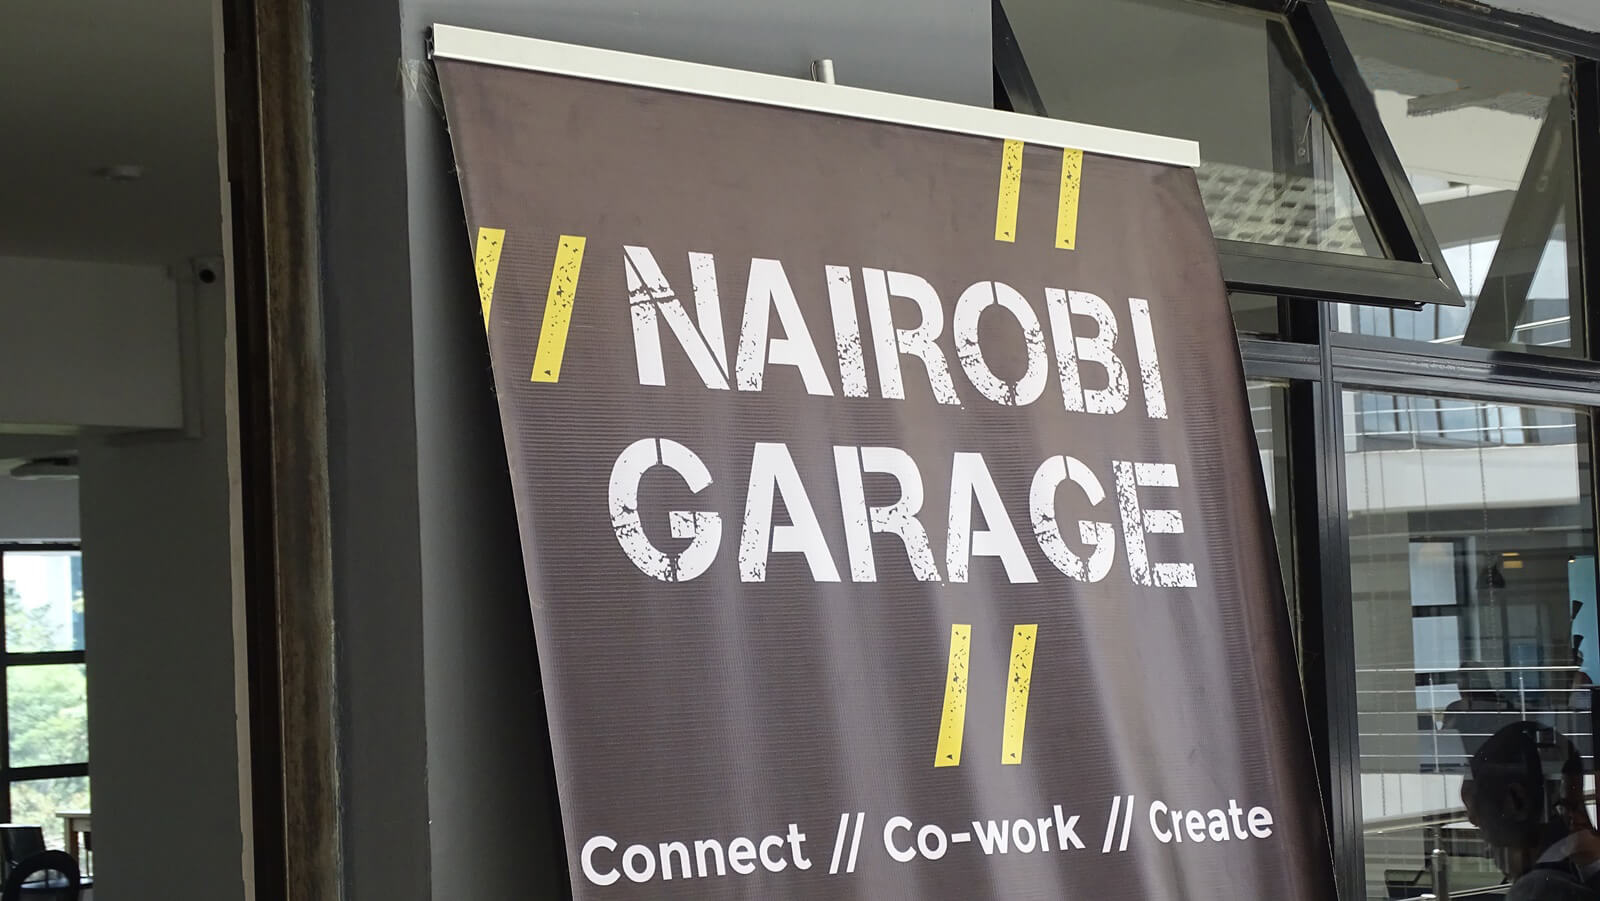 NAIROBI GARAGE